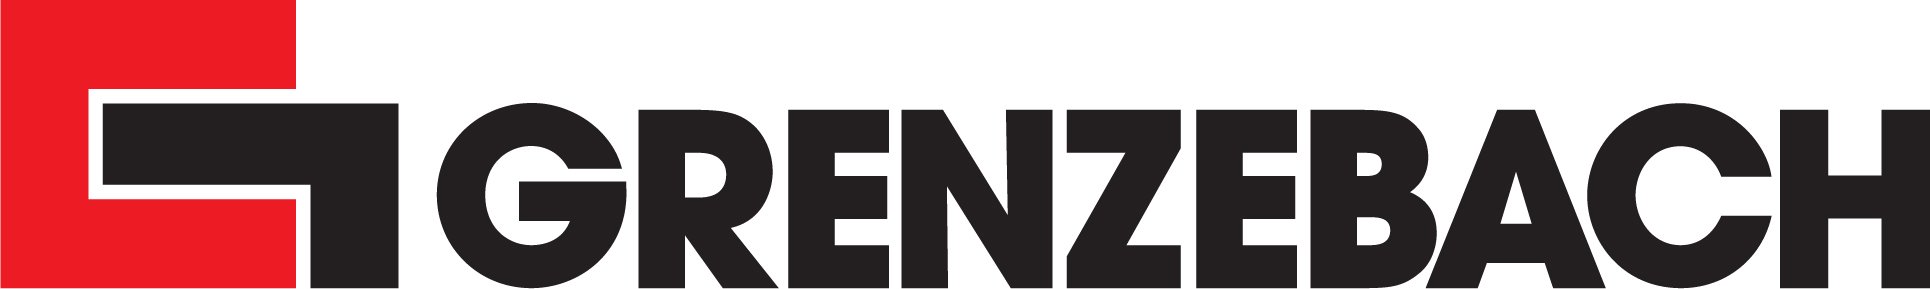 Grenzebach-Logo